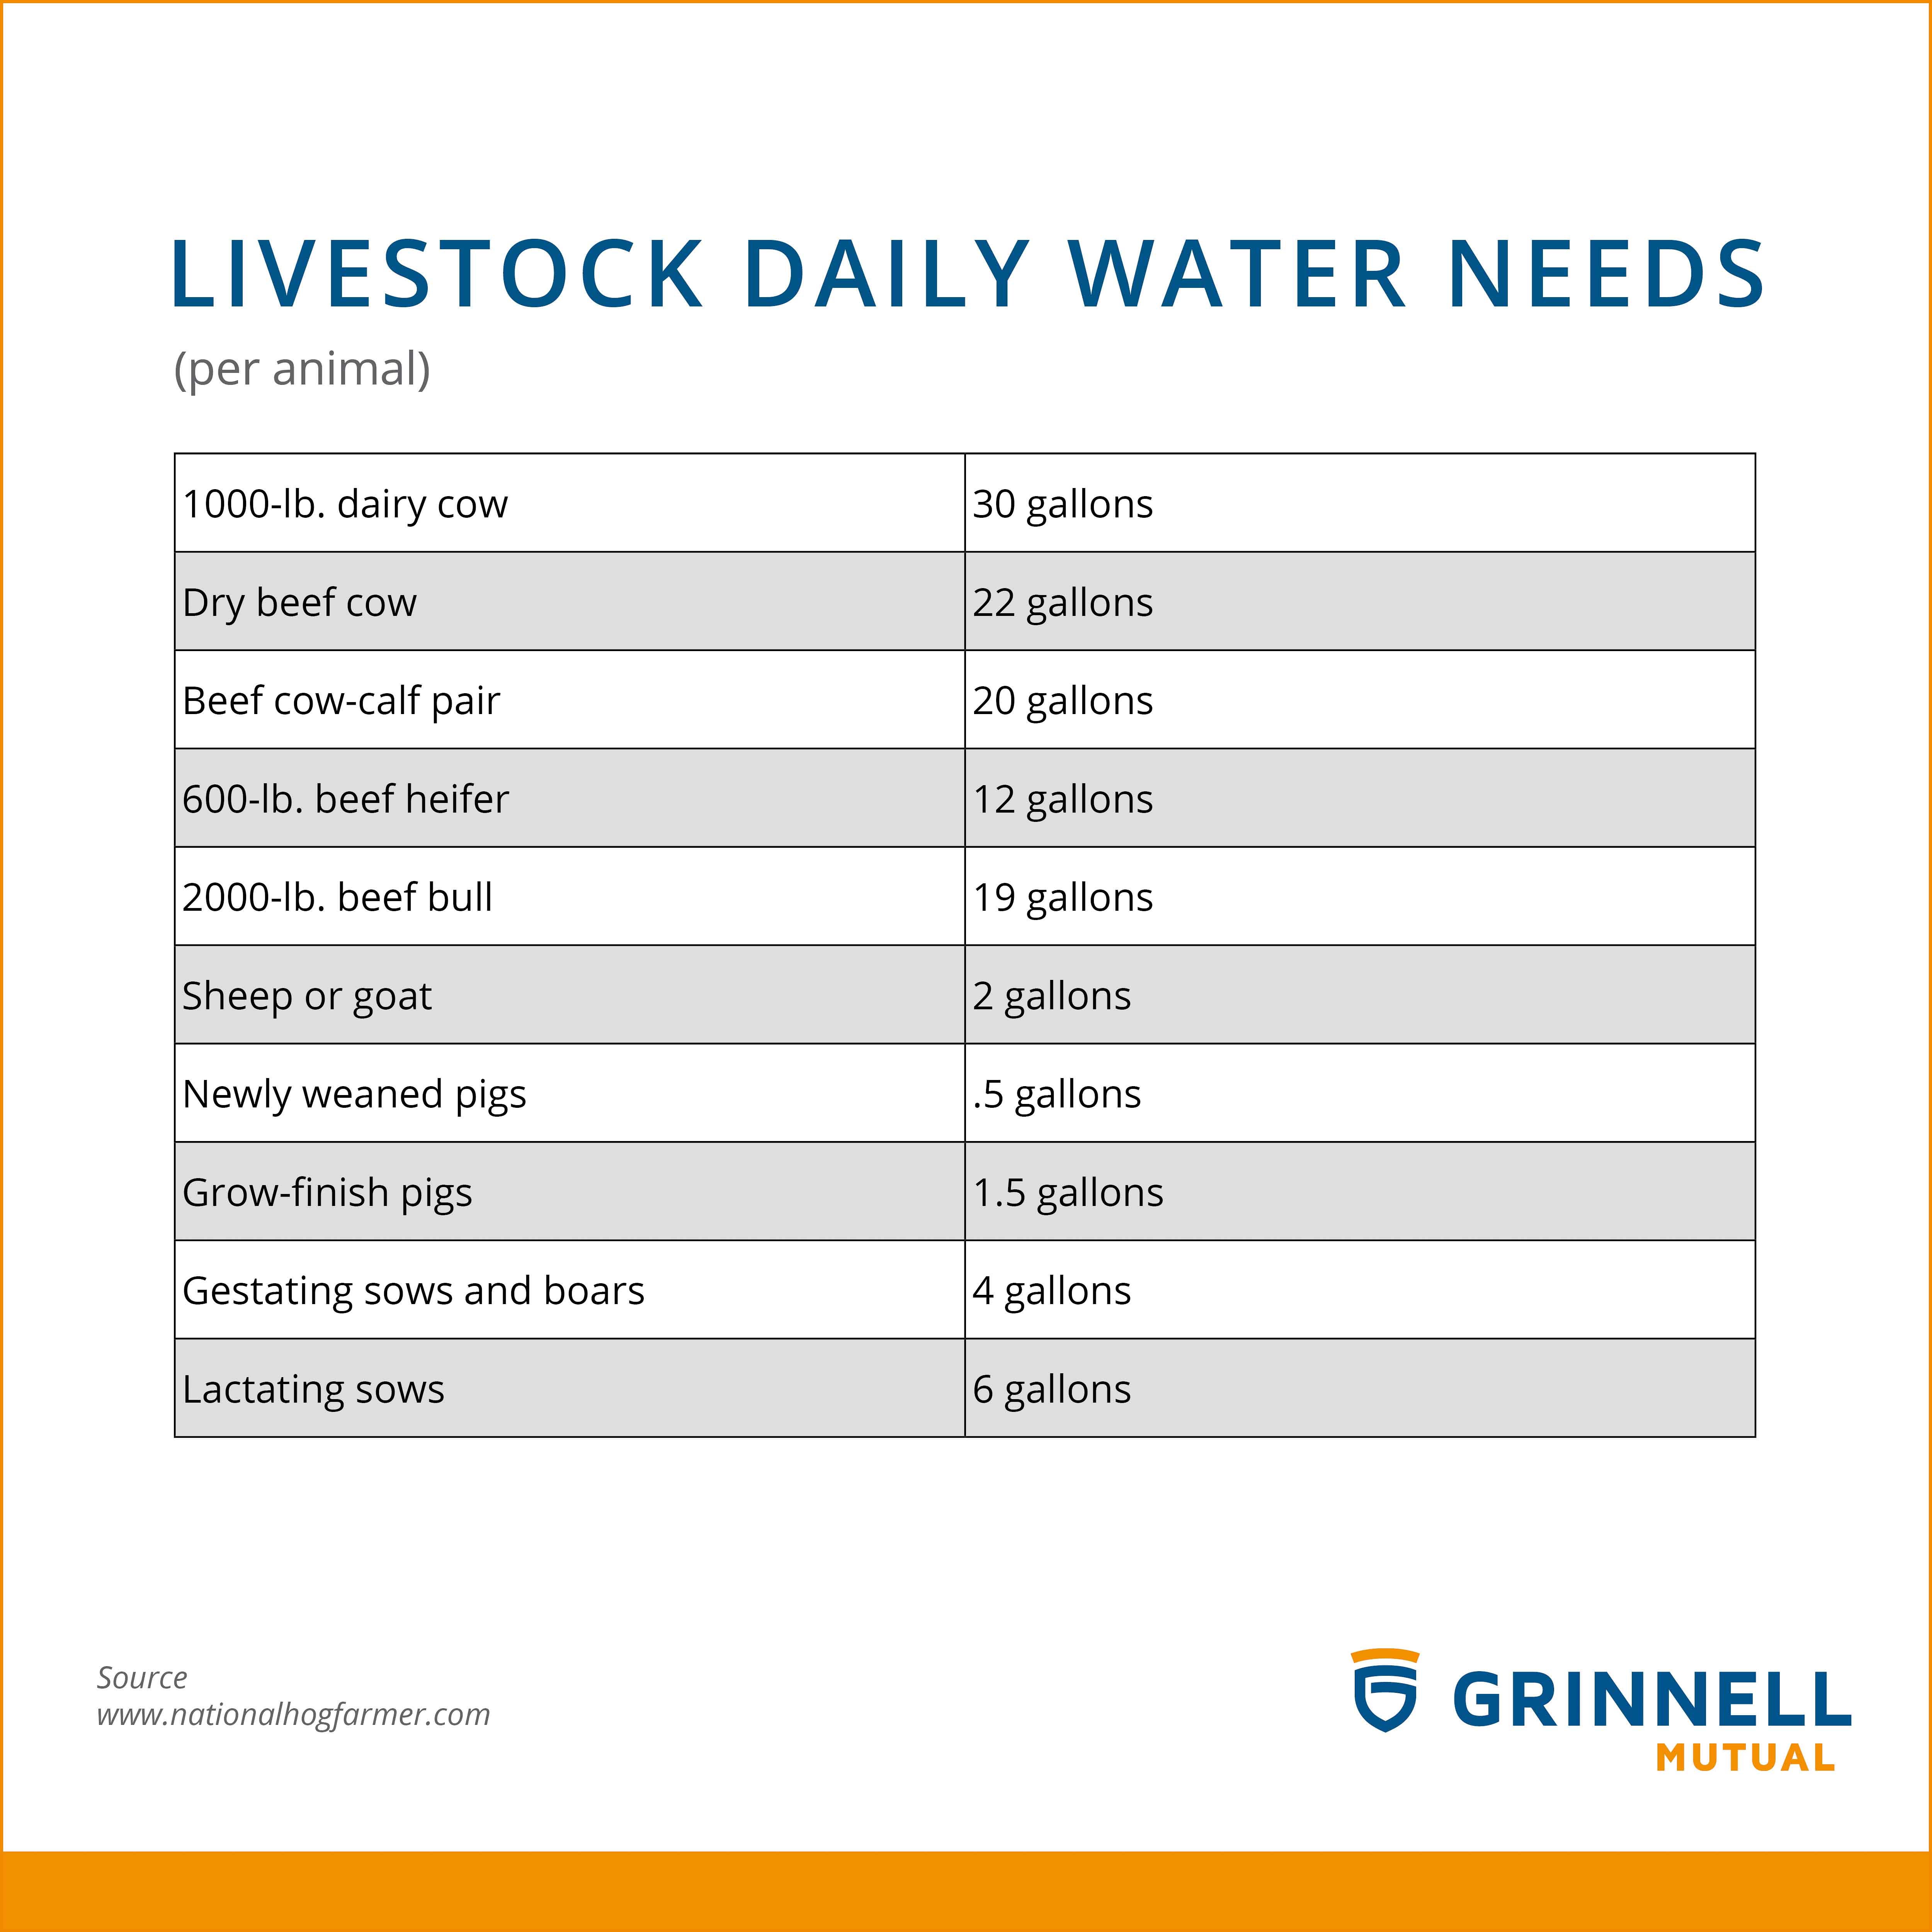 Livestock daily water needs